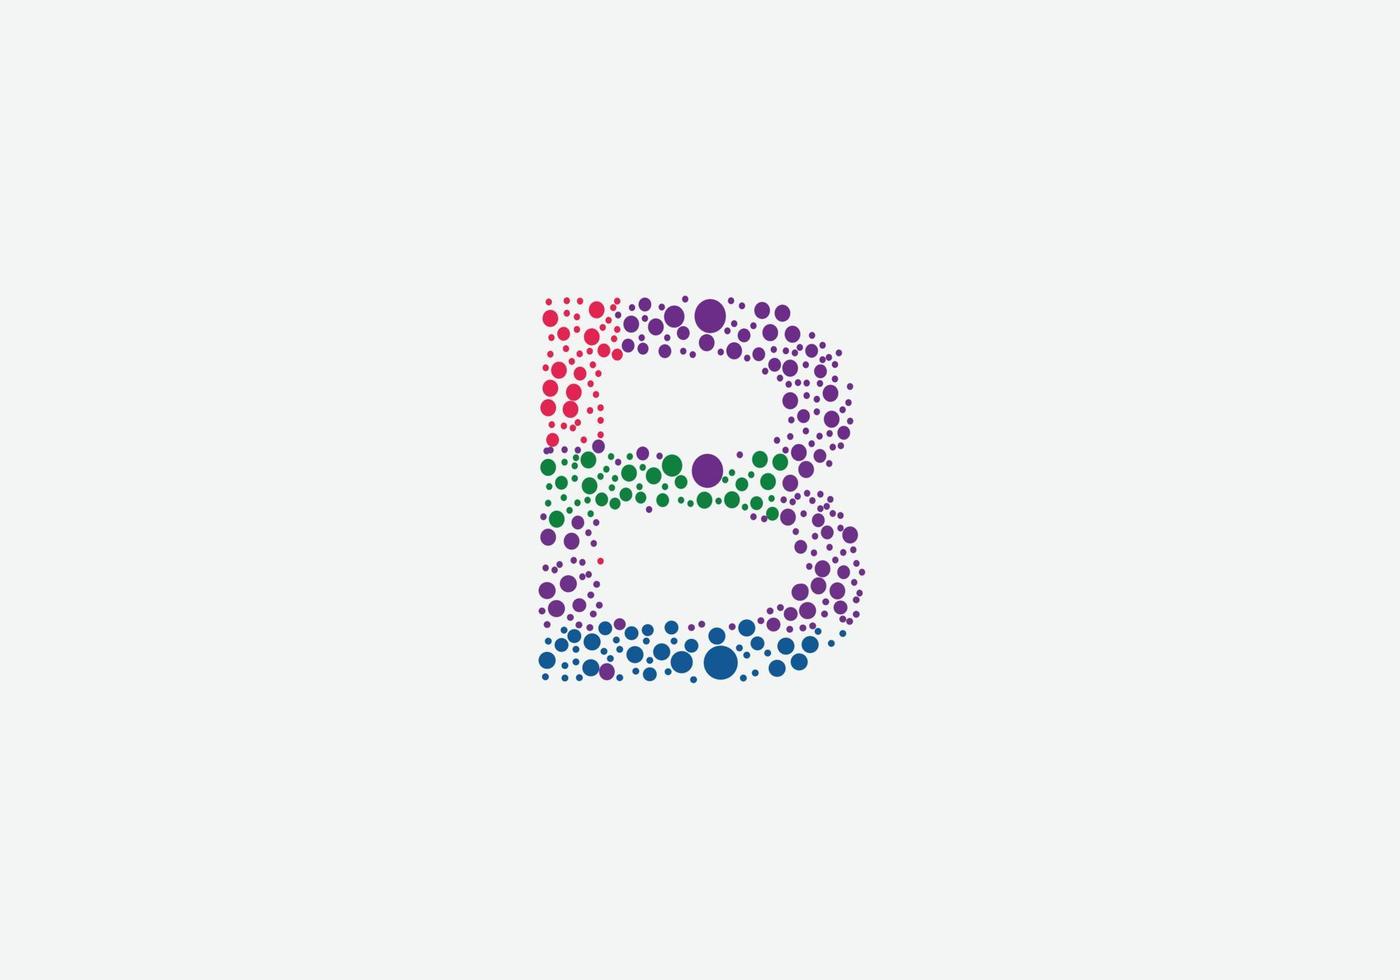 abstract b brief modern eerste logo ontwerp vector